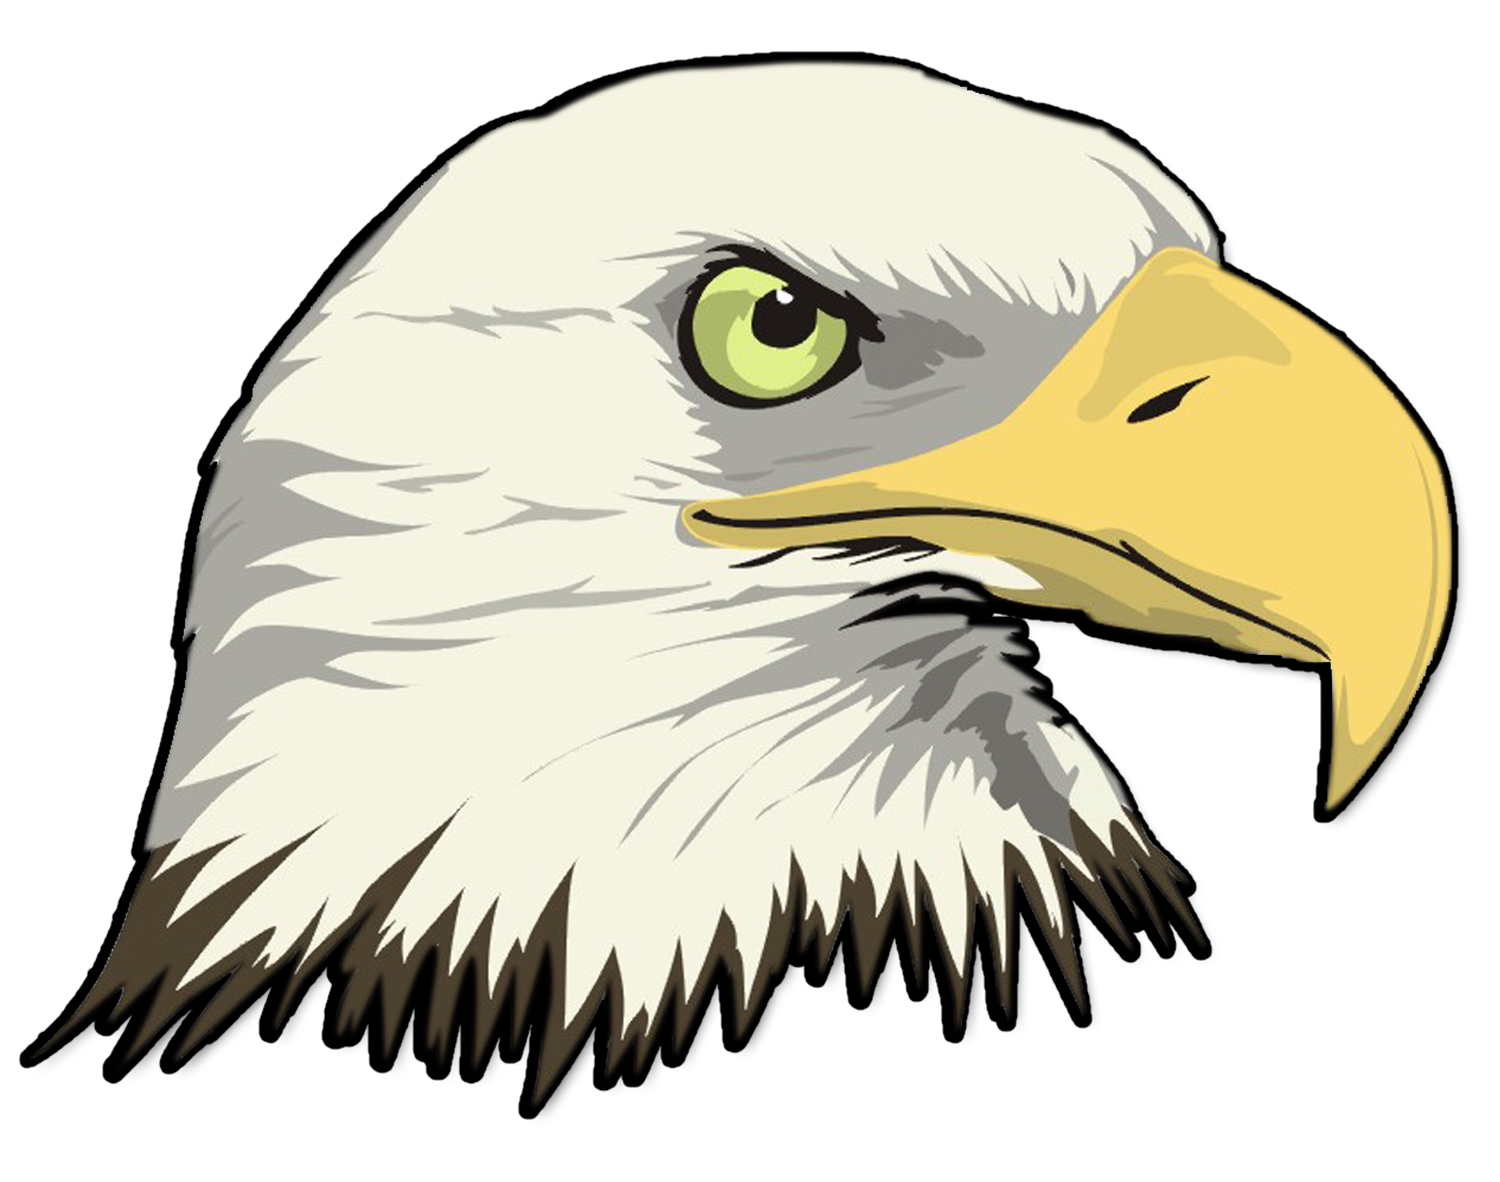 distressed eagle head Clipart